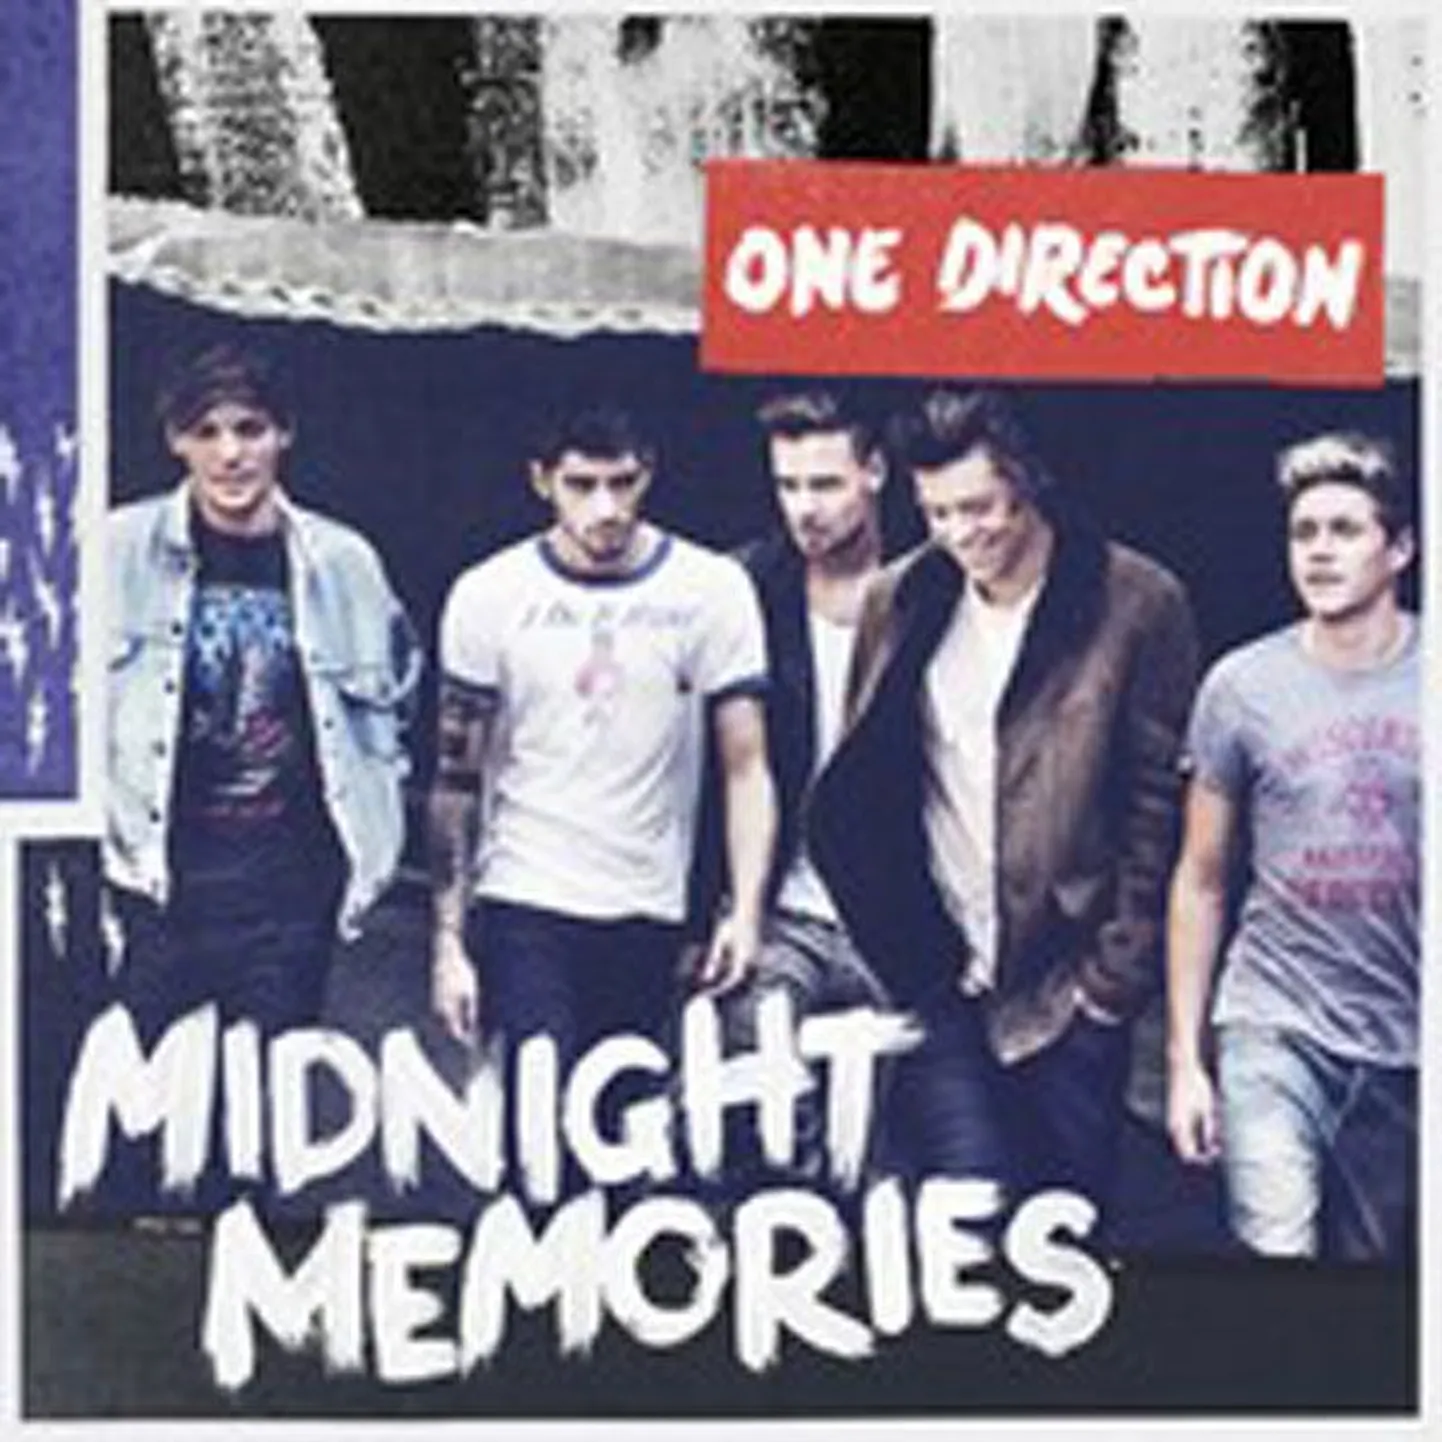 One Direction
Midnight Memories 
(Columbia)